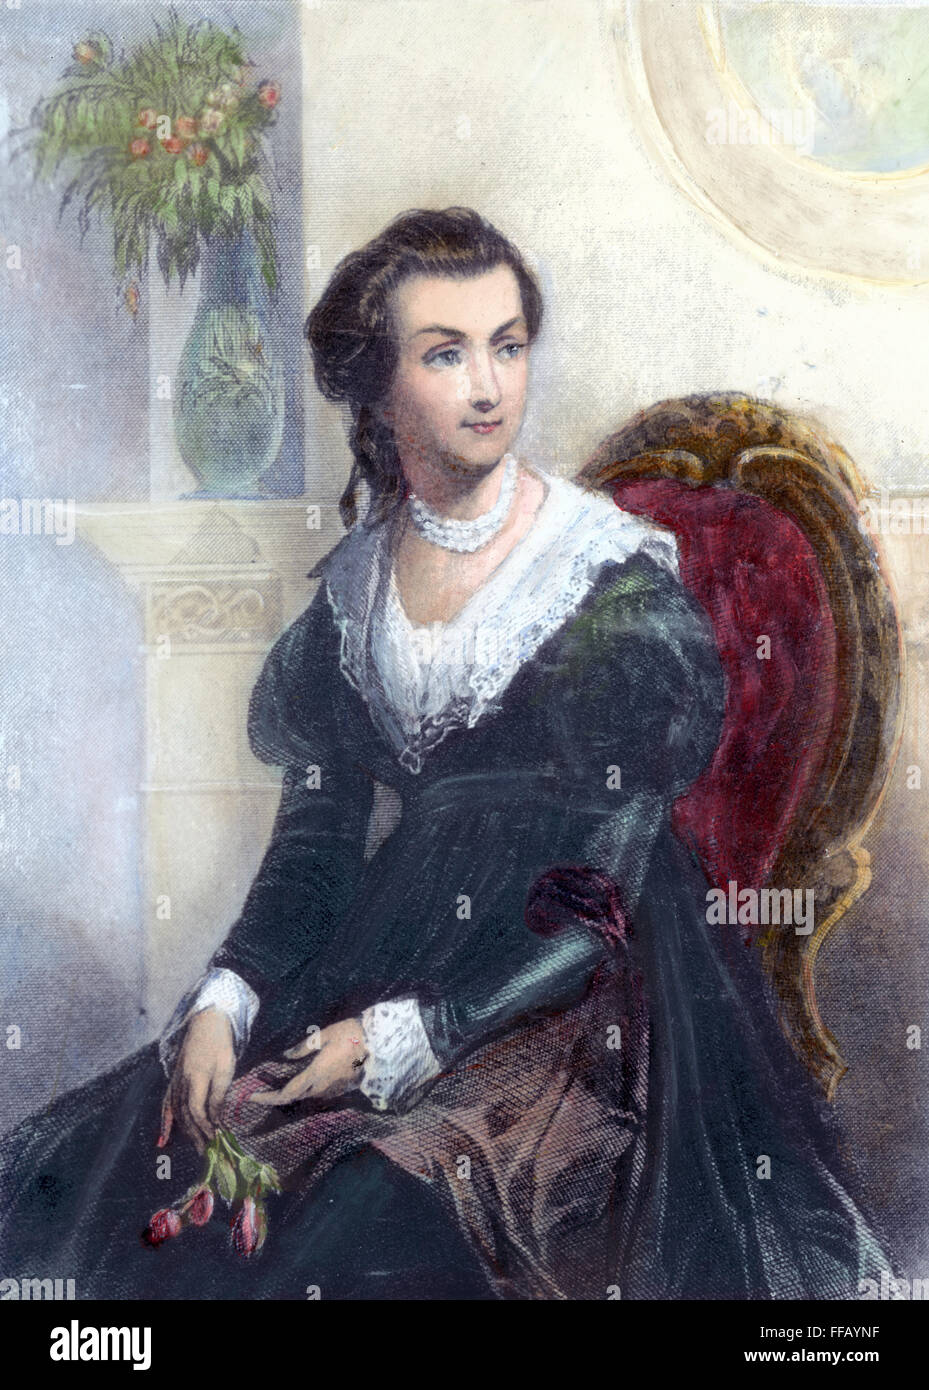 ABIGAIL ADAMS (1744-1818). /nMrs. John Adams, amerikanische First Lady. Stahlstich, 1854, durch John Sartain. Stockfoto